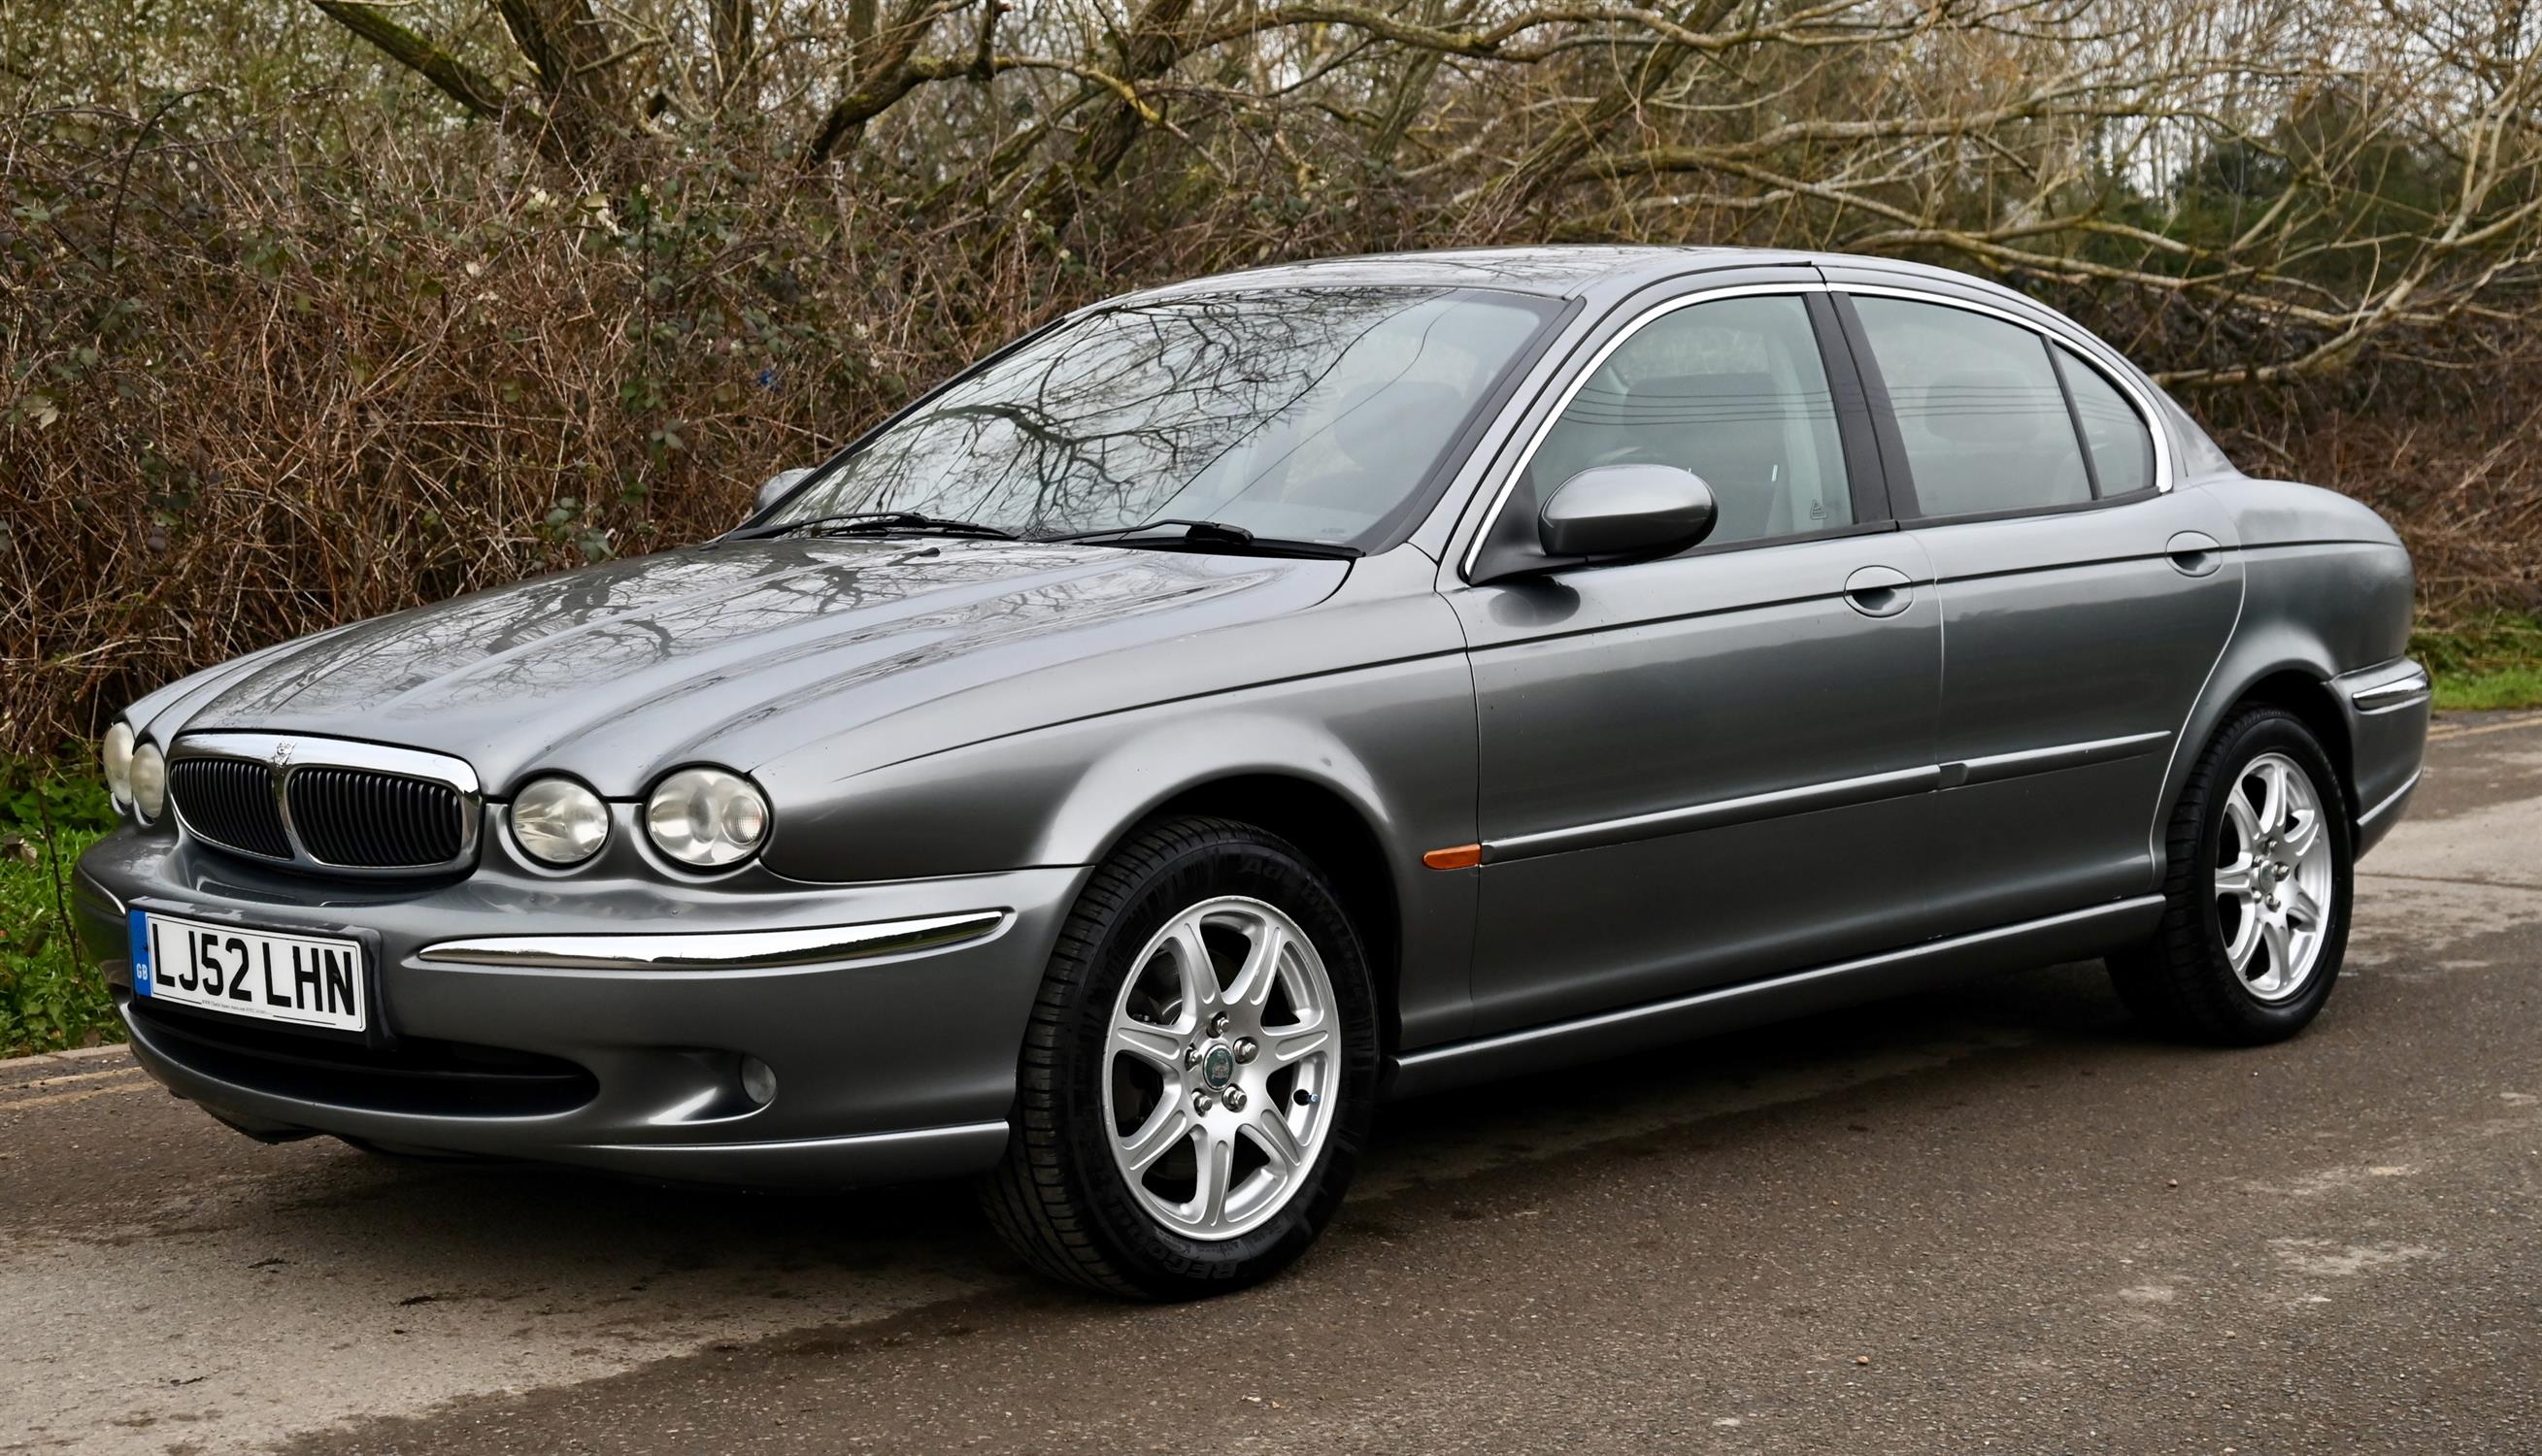 2002 Jaguar X-Type V6 Saloon. Registration number: LJ52 LHN Mileage: 94,400. Gunmetal Metallic - Image 2 of 9